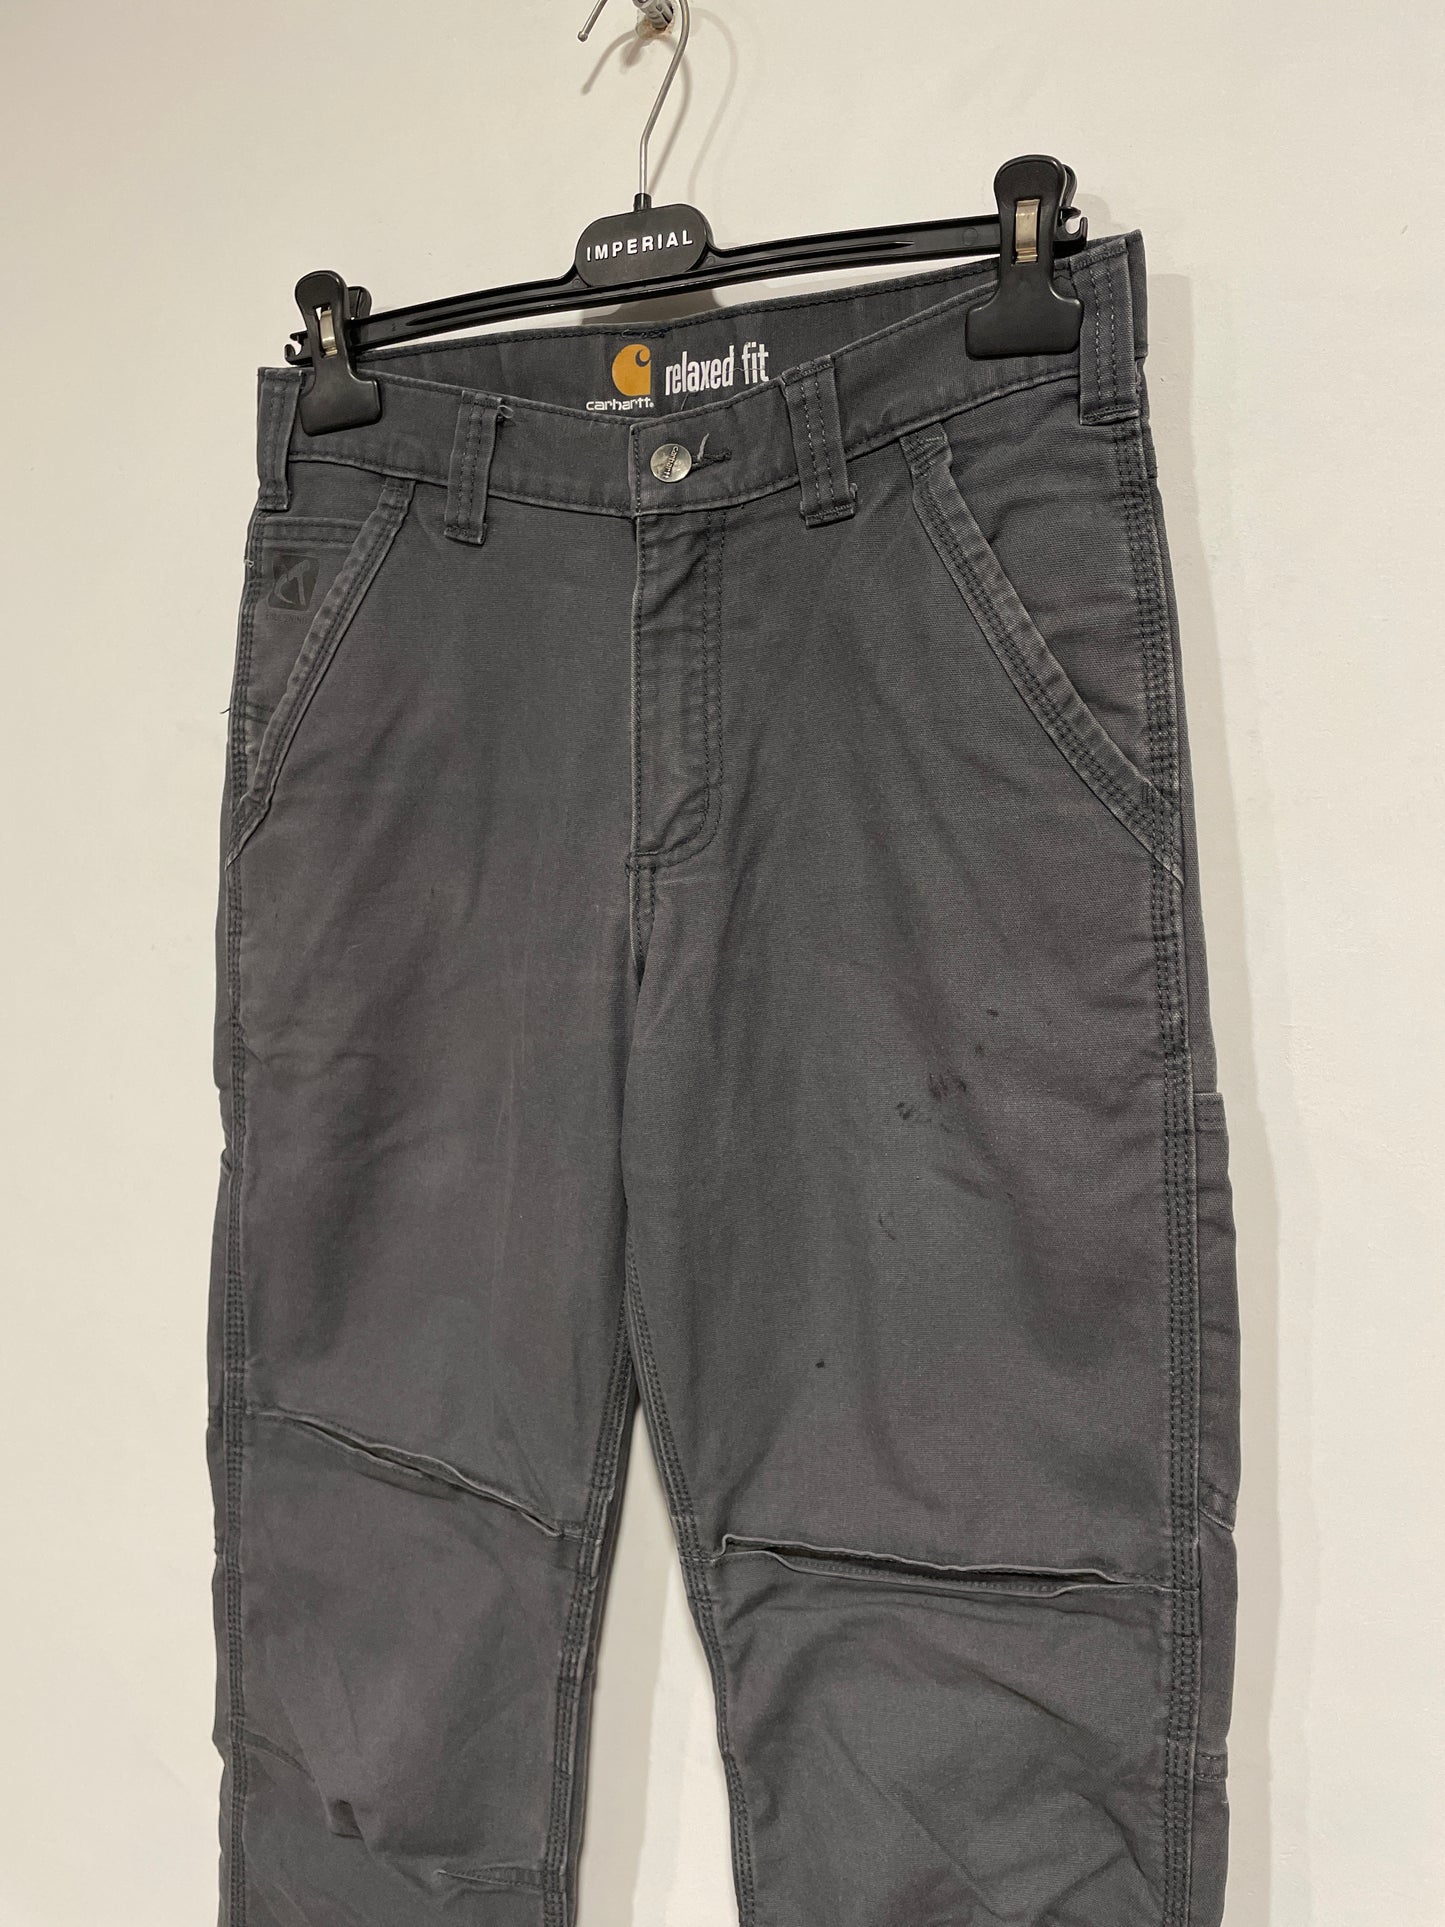 Jeans Carhartt double knee (A432)